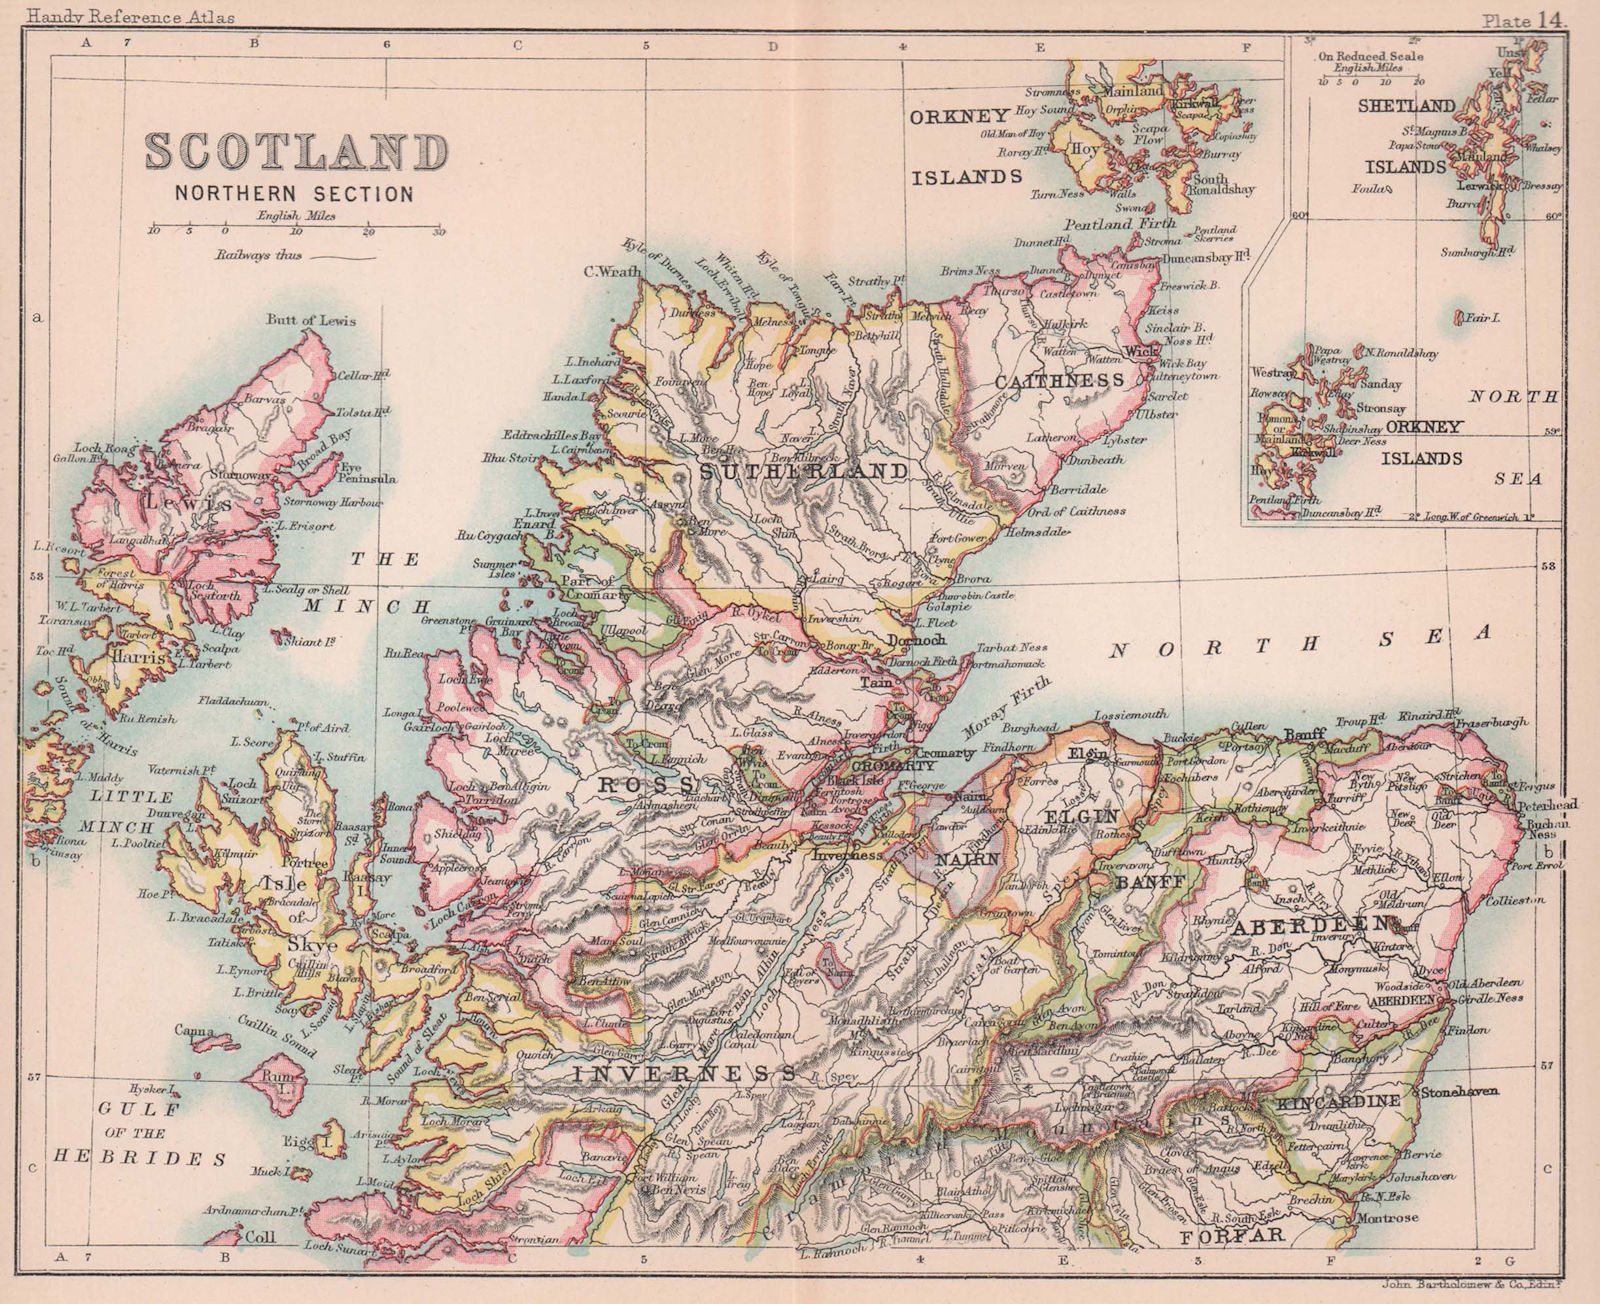 Associate Product Northern Scotland. Highlands & Islands. BARTHOLOMEW 1893 old antique map chart